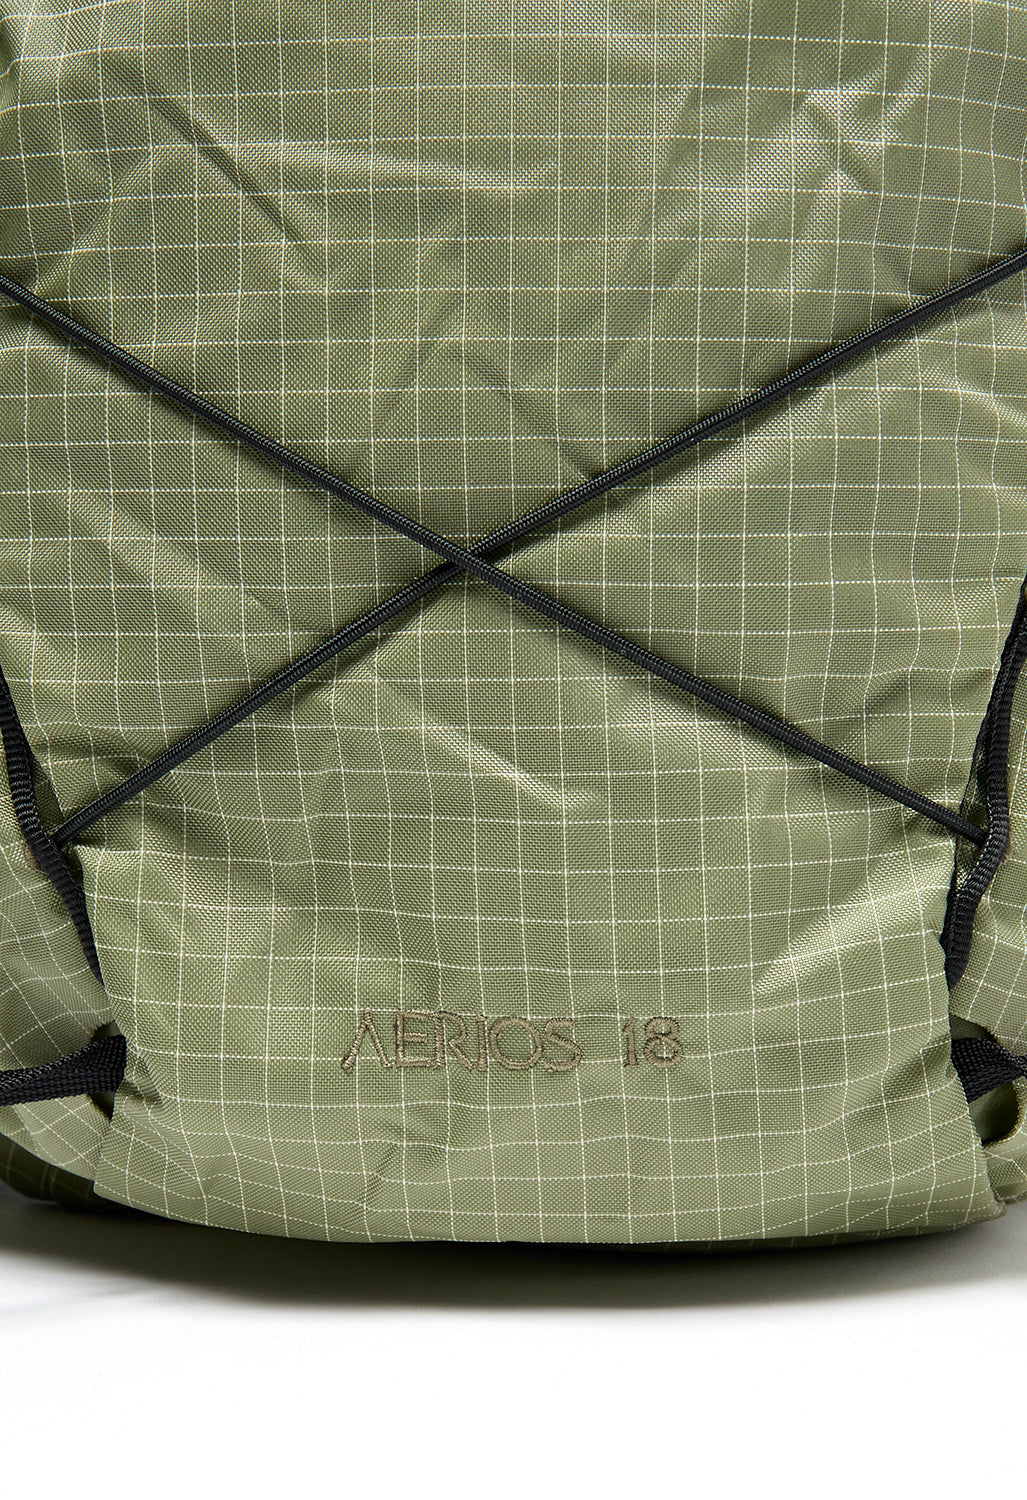 Arc'teryx Aerios 18 Backpack - Chloris / Forage